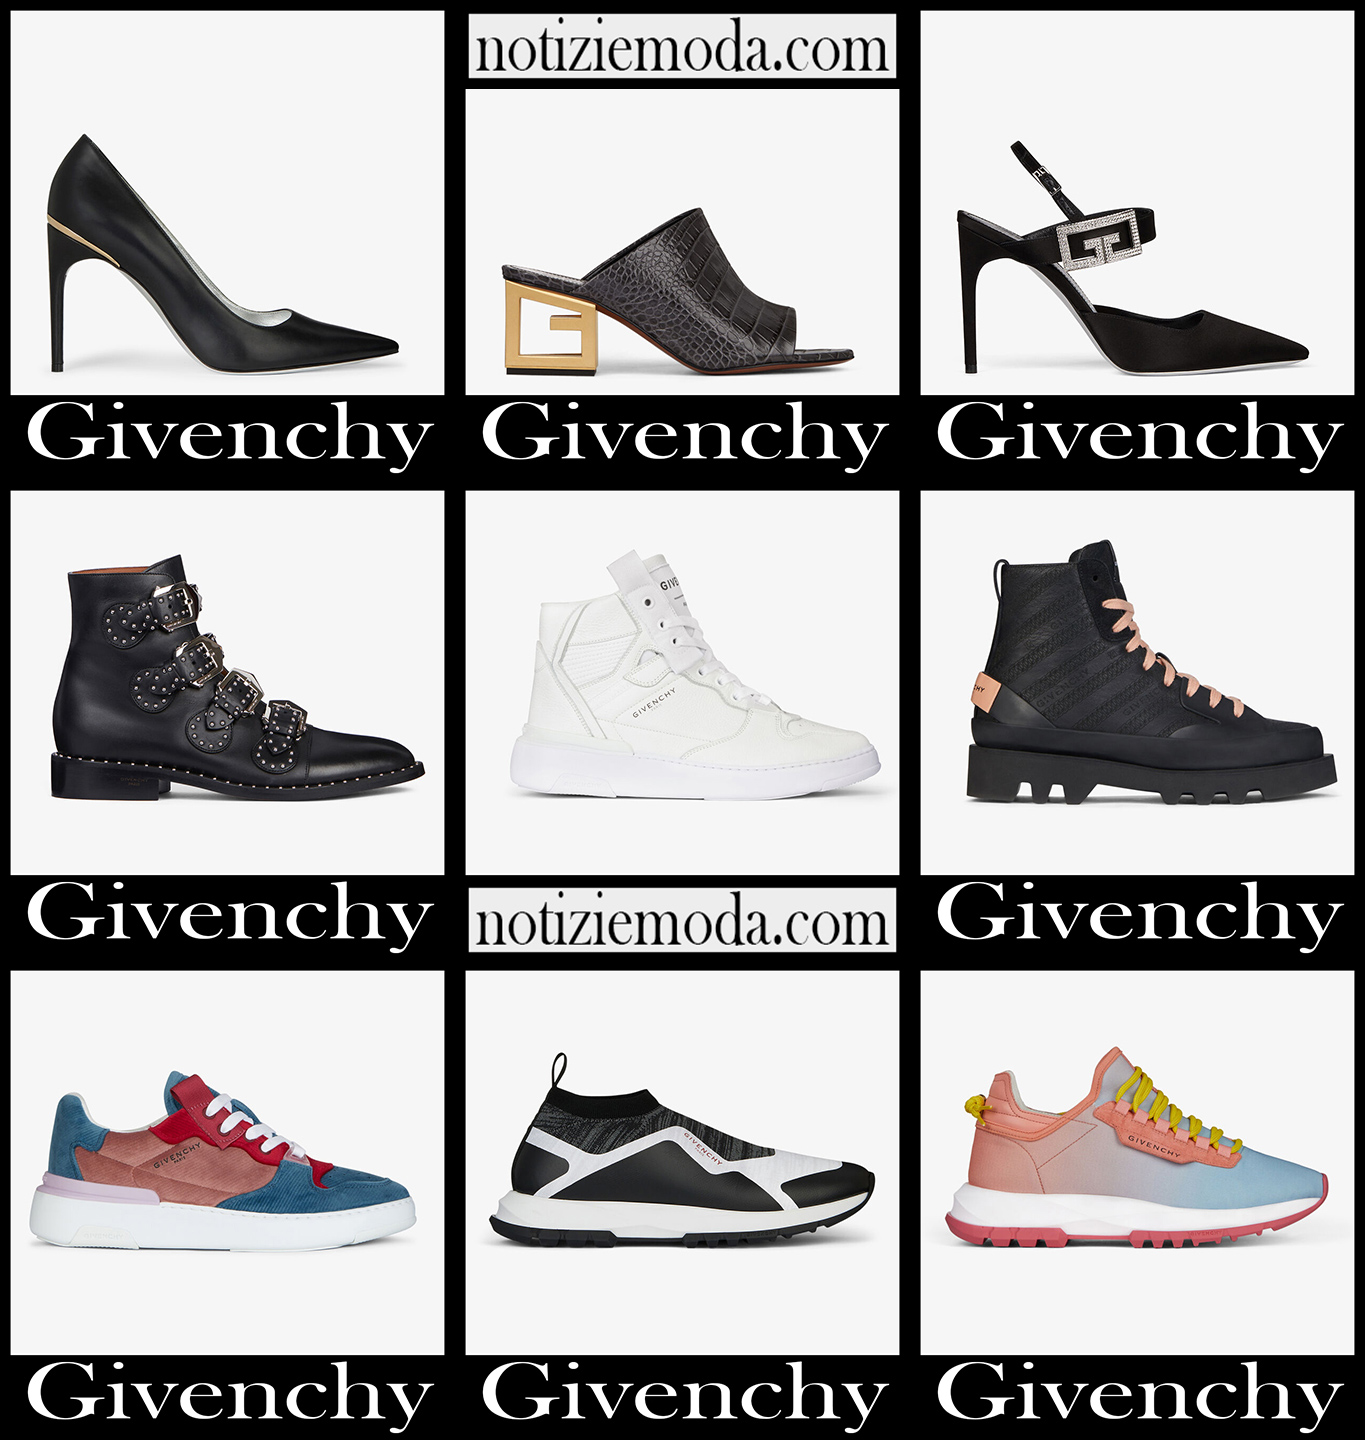 Nuovi arrivi scarpe Givenchy 2021 calzature moda donna